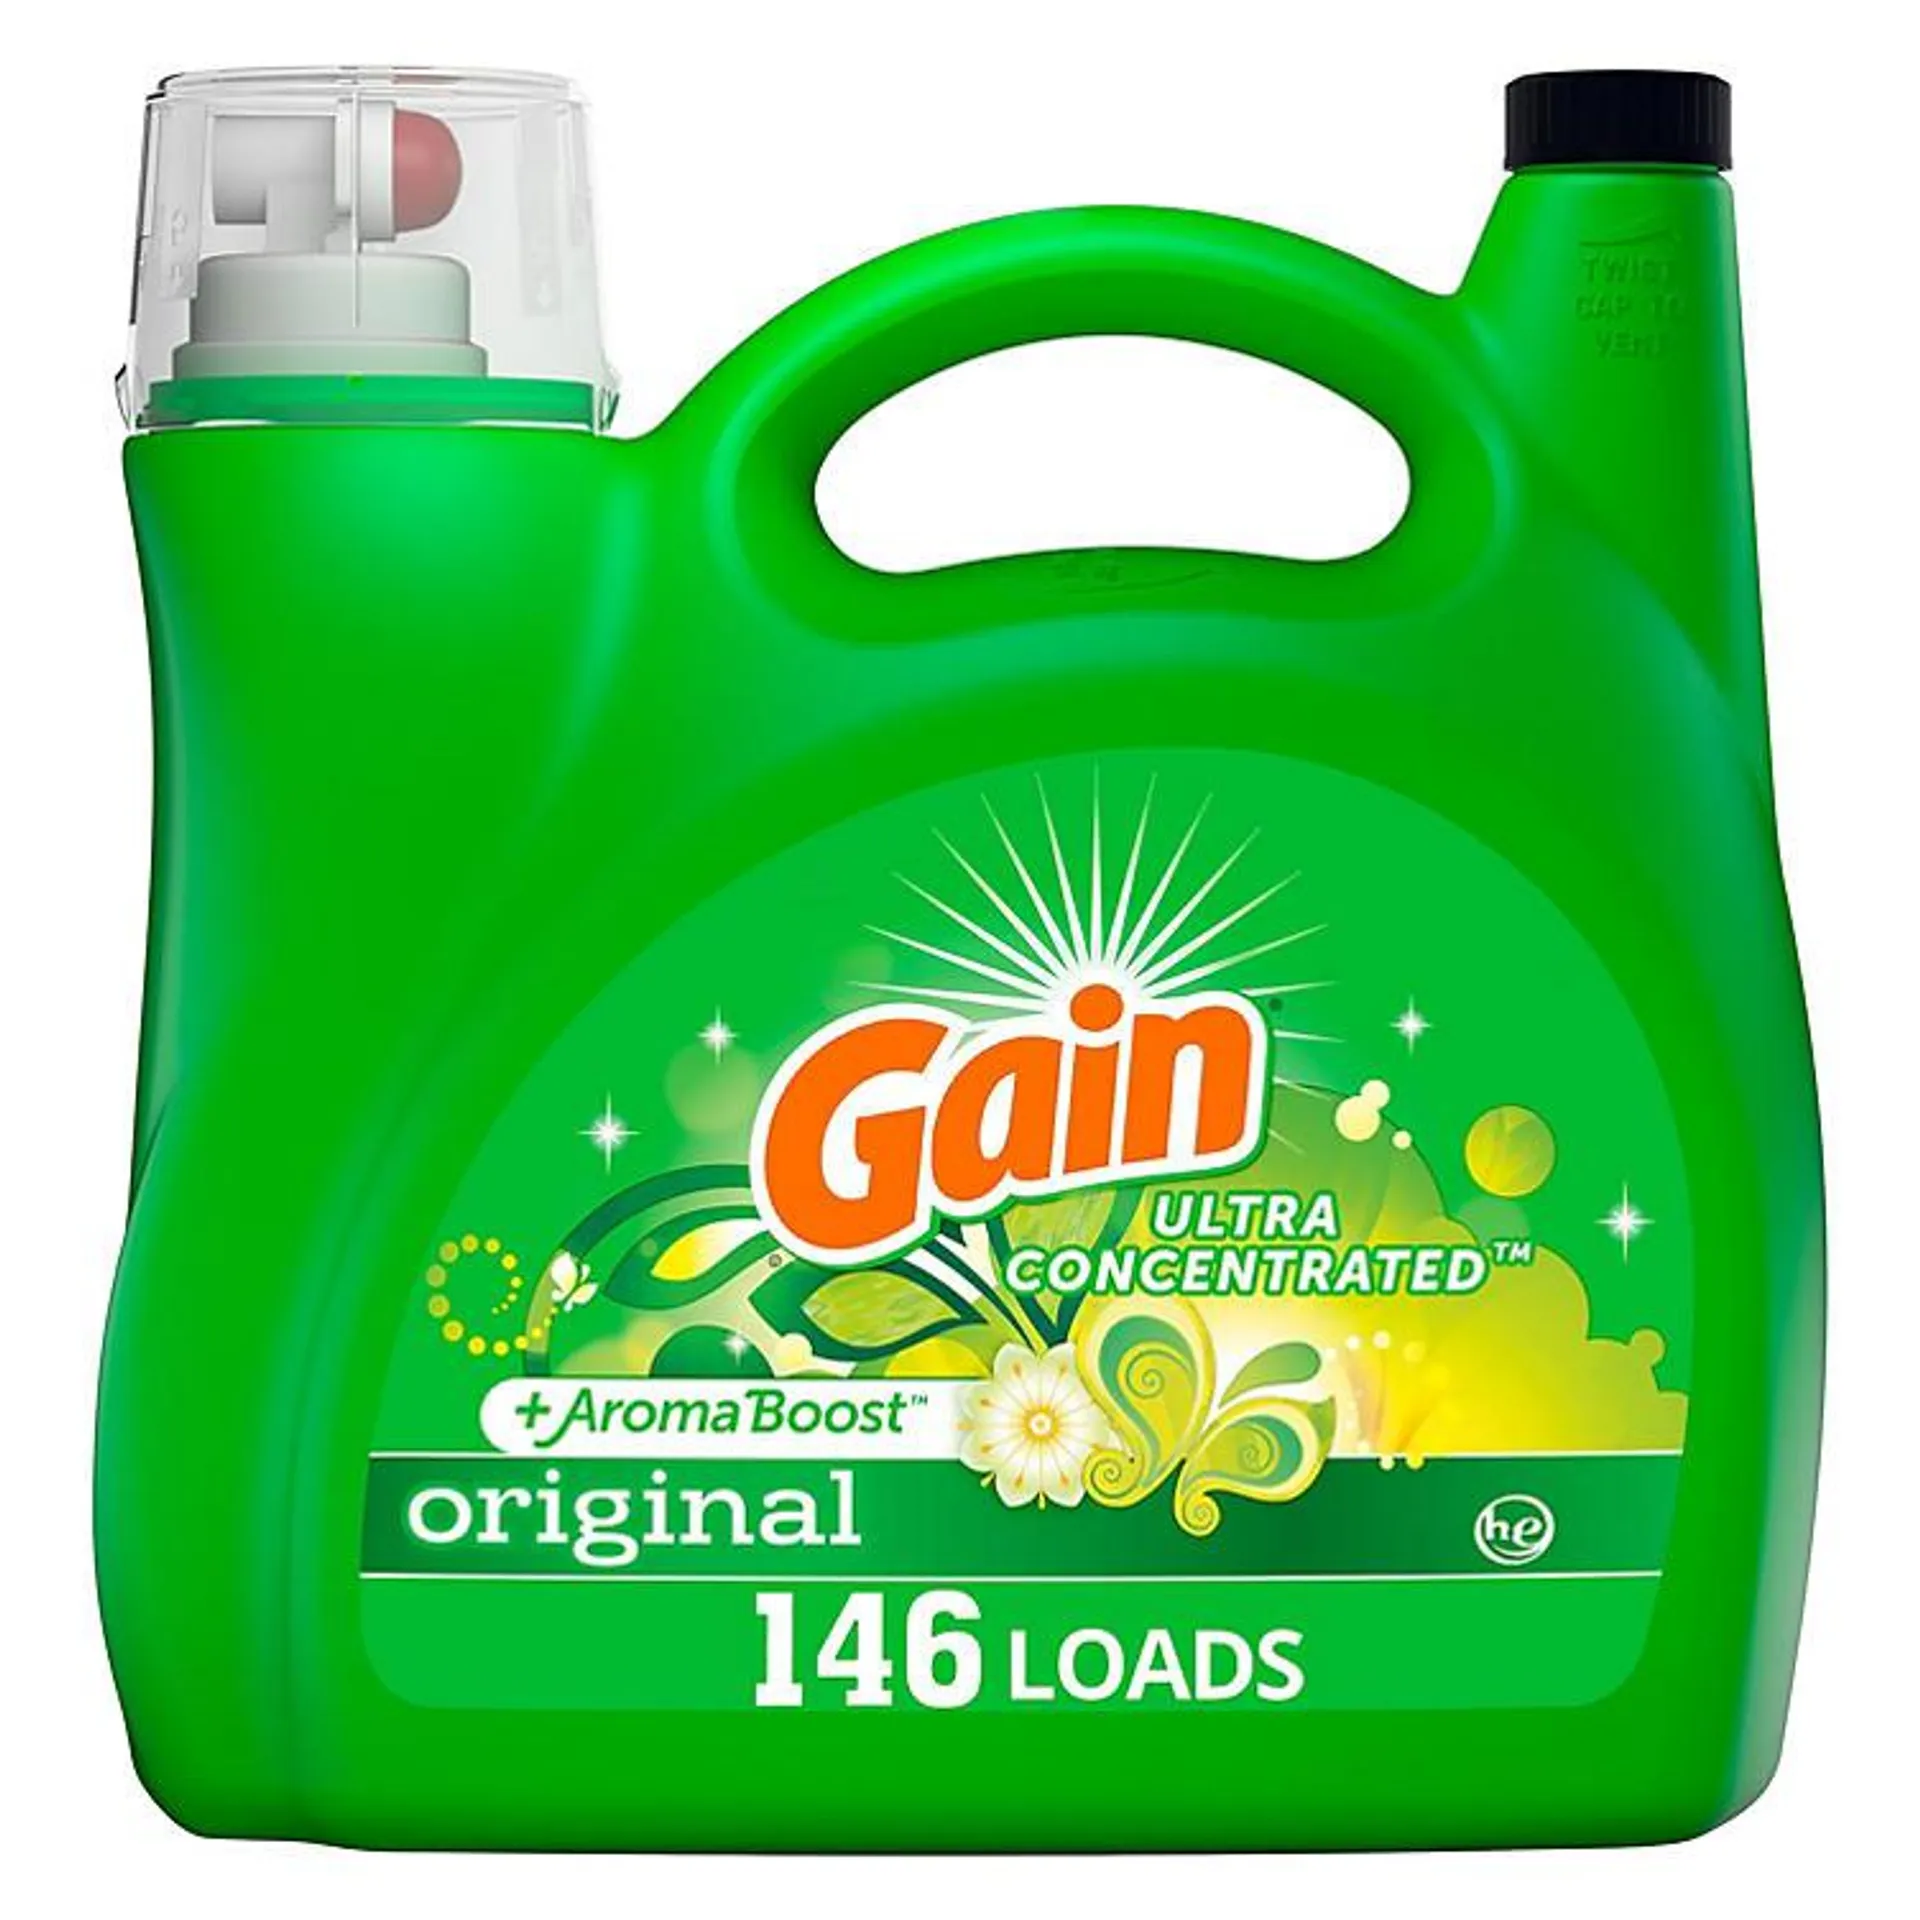 Gain Ultra Concentrated + AromaBoost Liquid Laundry Detergent, Original (146 loads, 200 fl. oz.)